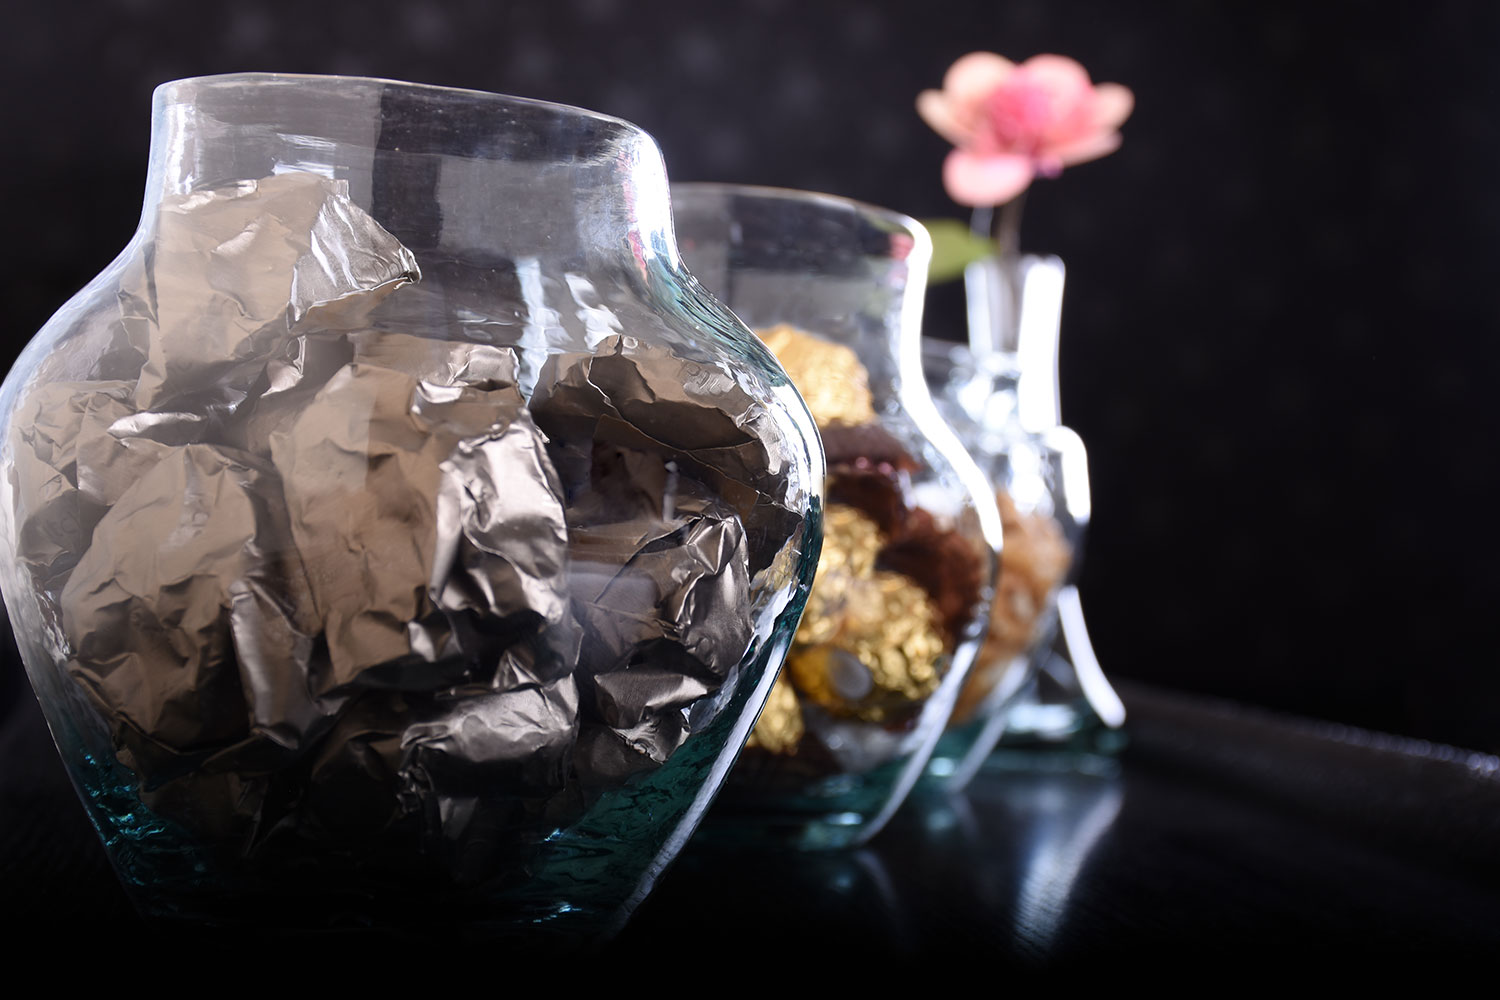 artisitc-glass-hand-made-art-vase-daisy-flower-passion-art-glass